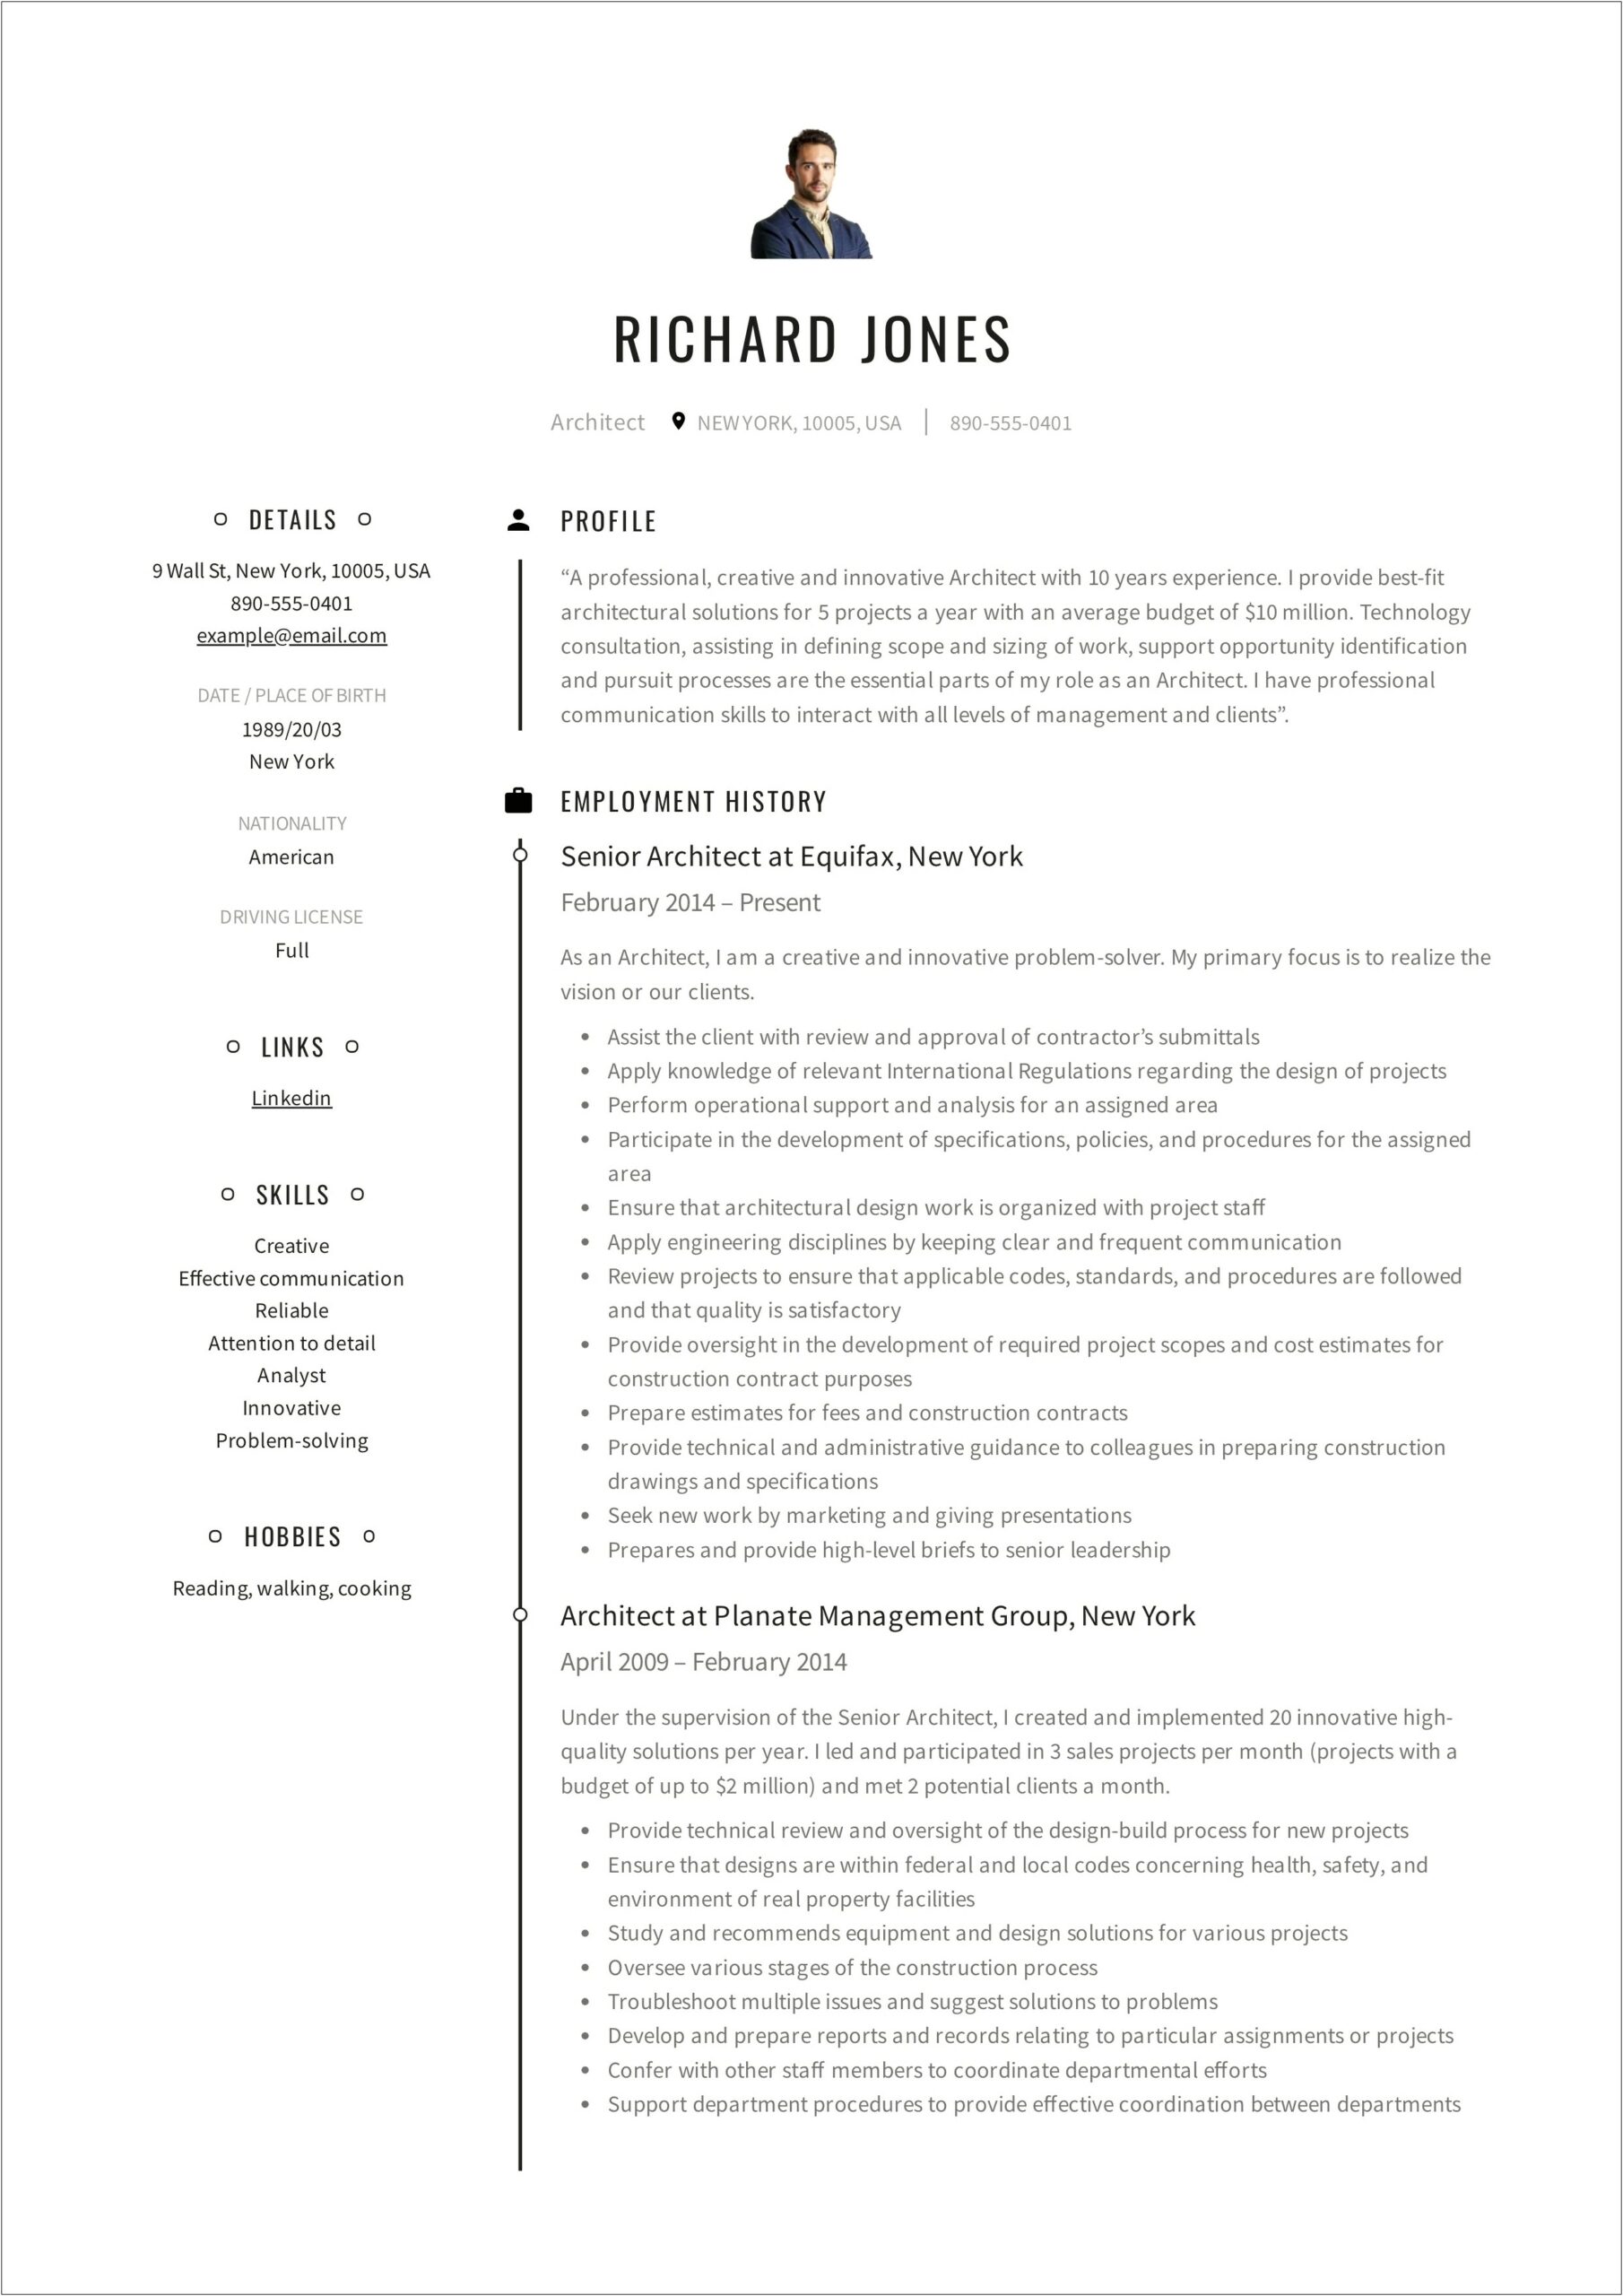 Architect Job Summary For Resume